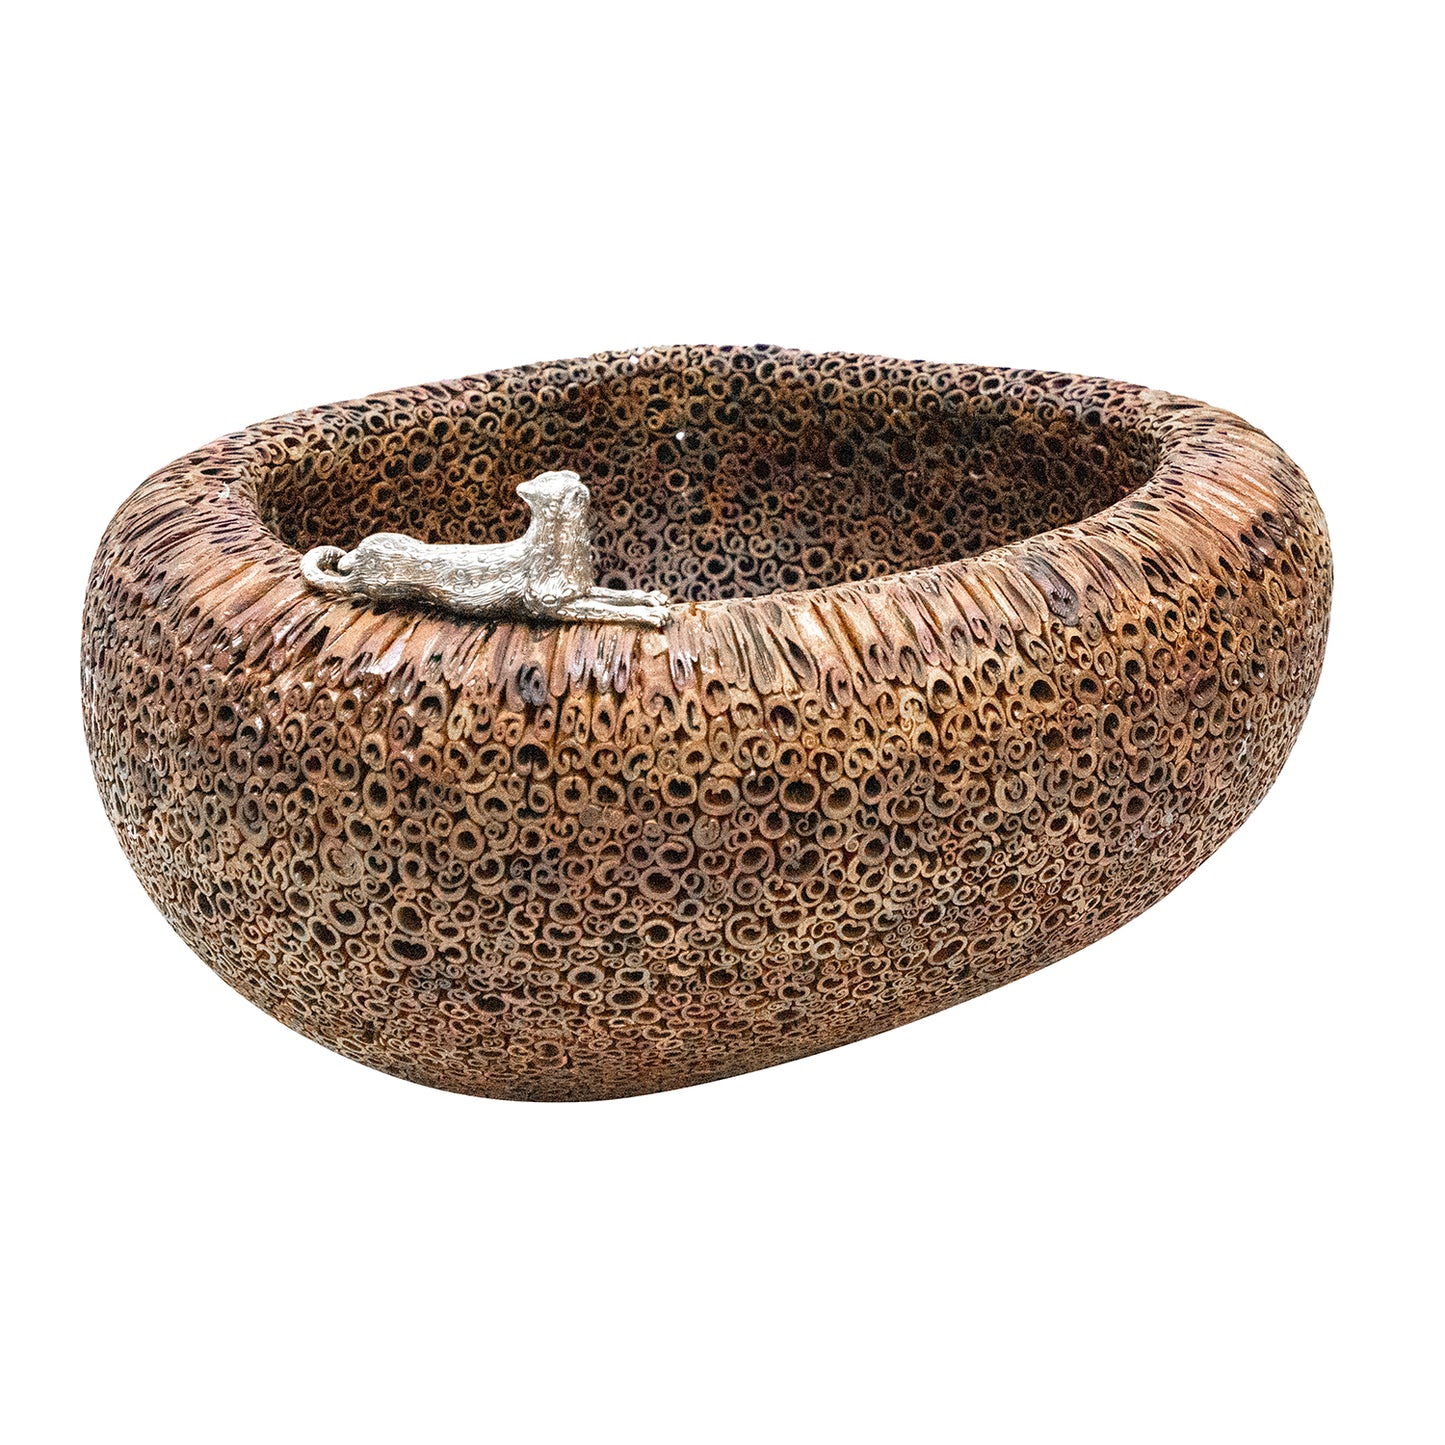 Cinnamon Bowl with Cheetah #S